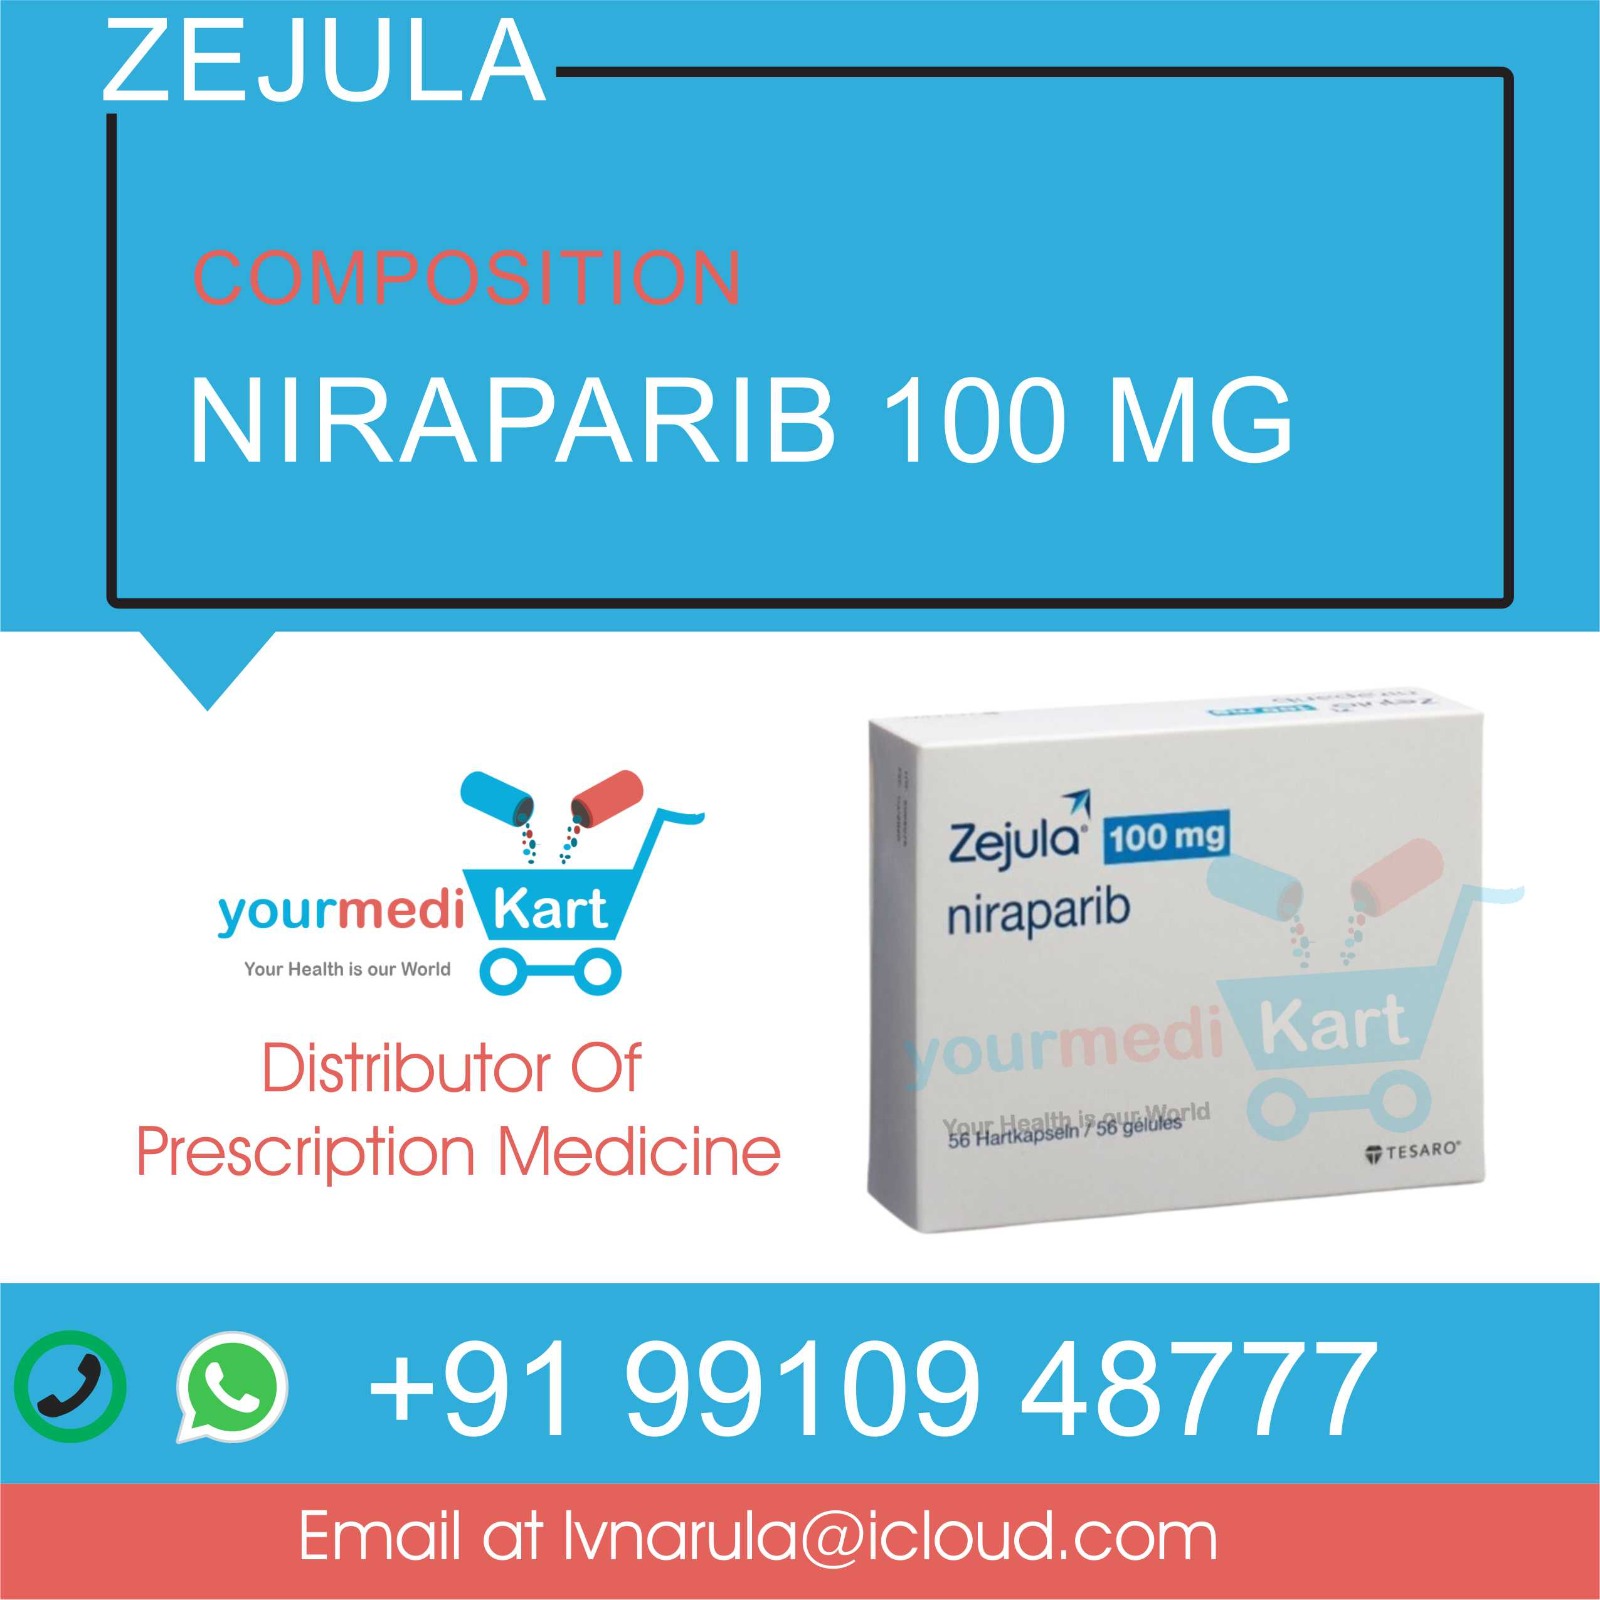 Zejula Niraparib 100 MG price